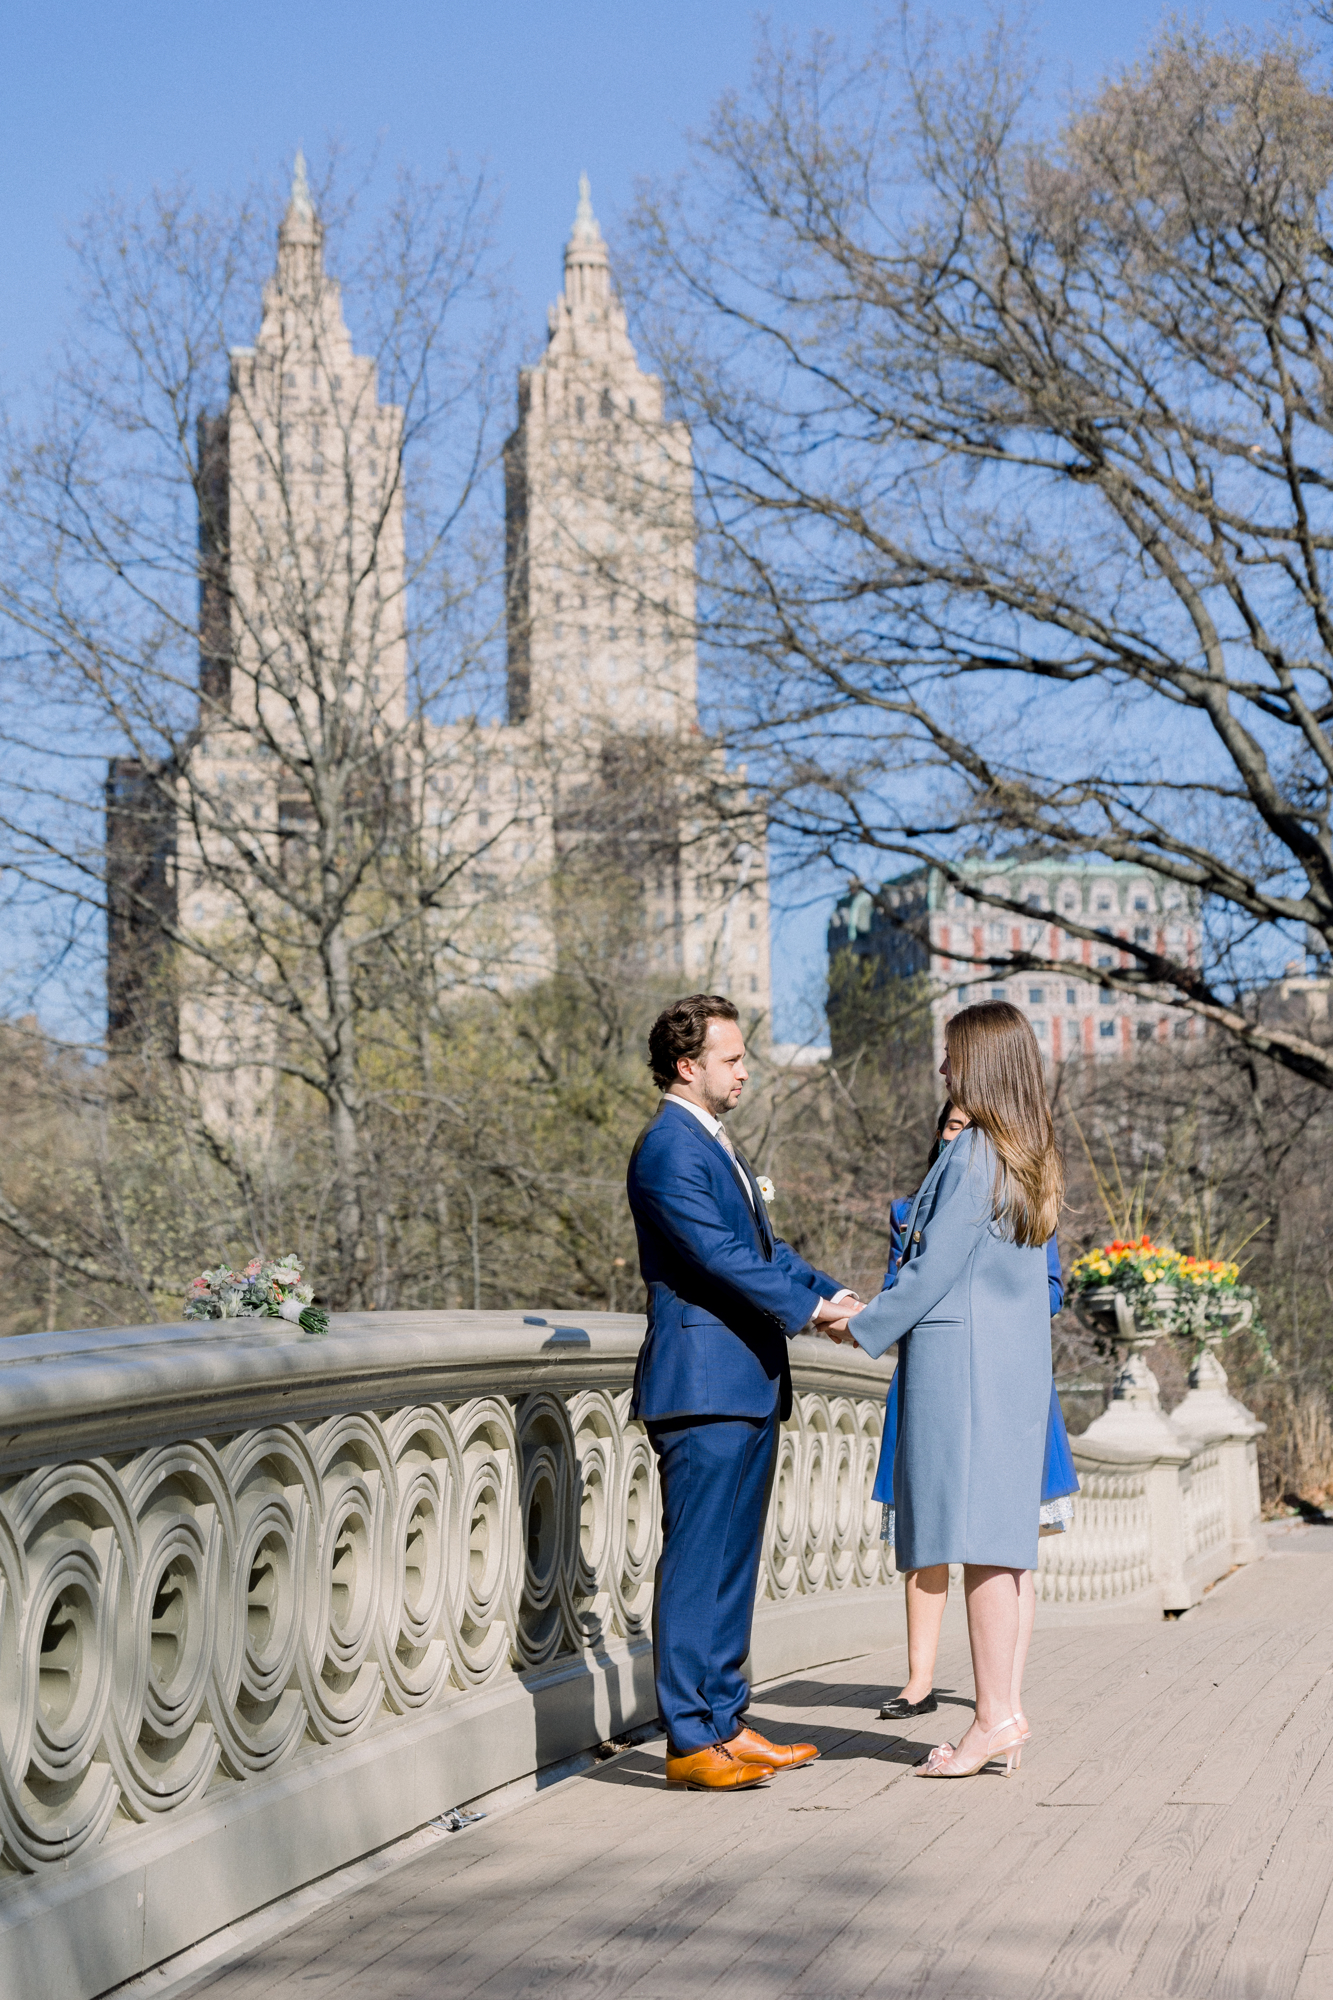 Gorgeous Bow Bridge Wedding Photos Among Central Park's Spring Cherry Blossoms